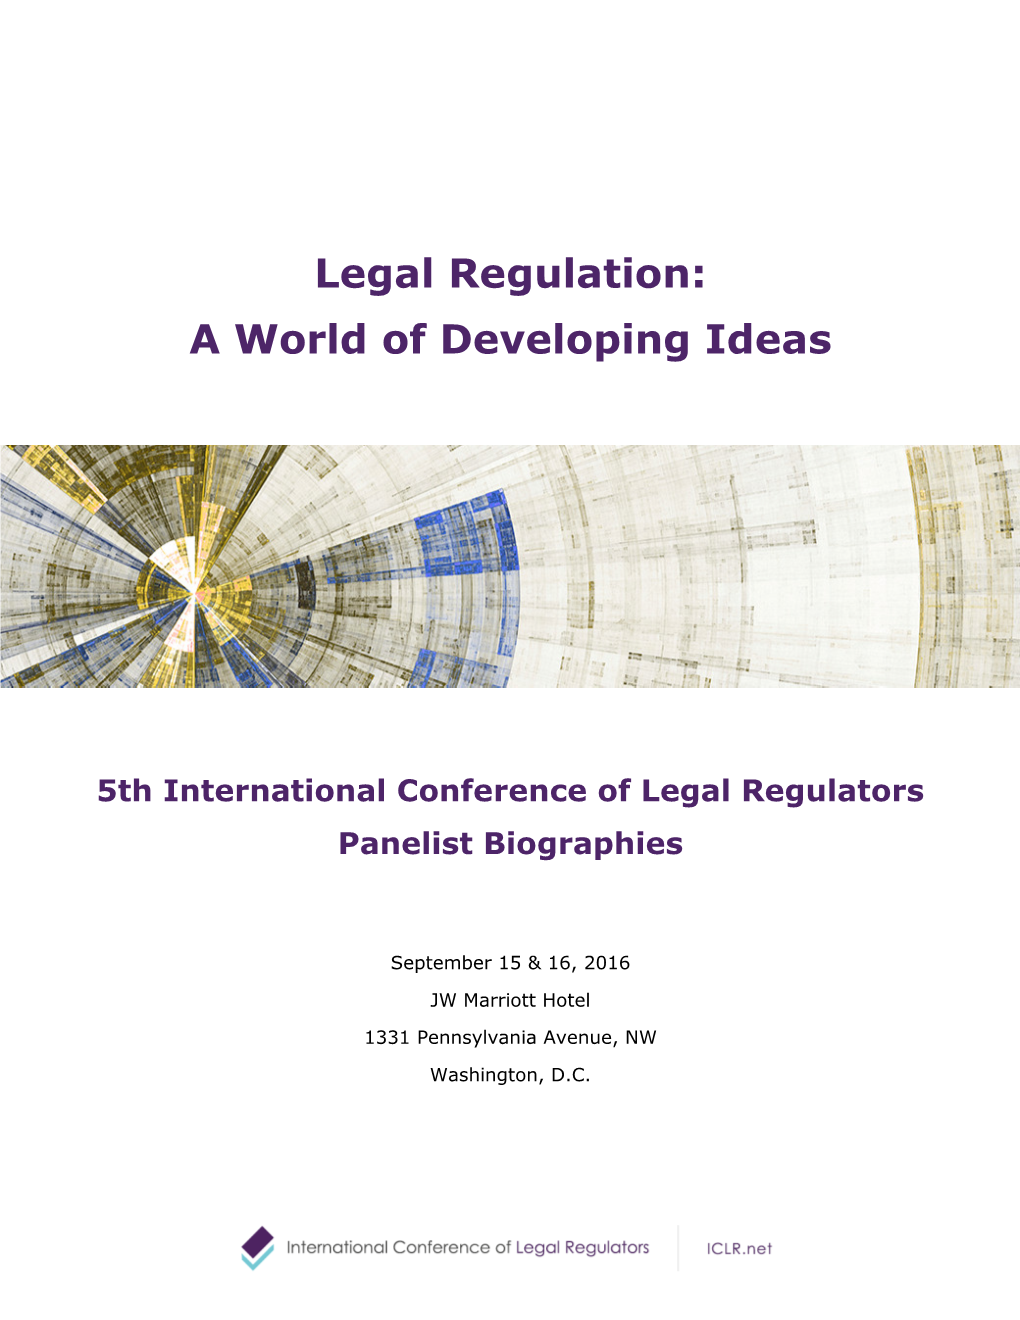 Legal Regulation: a World of Developing Ideas